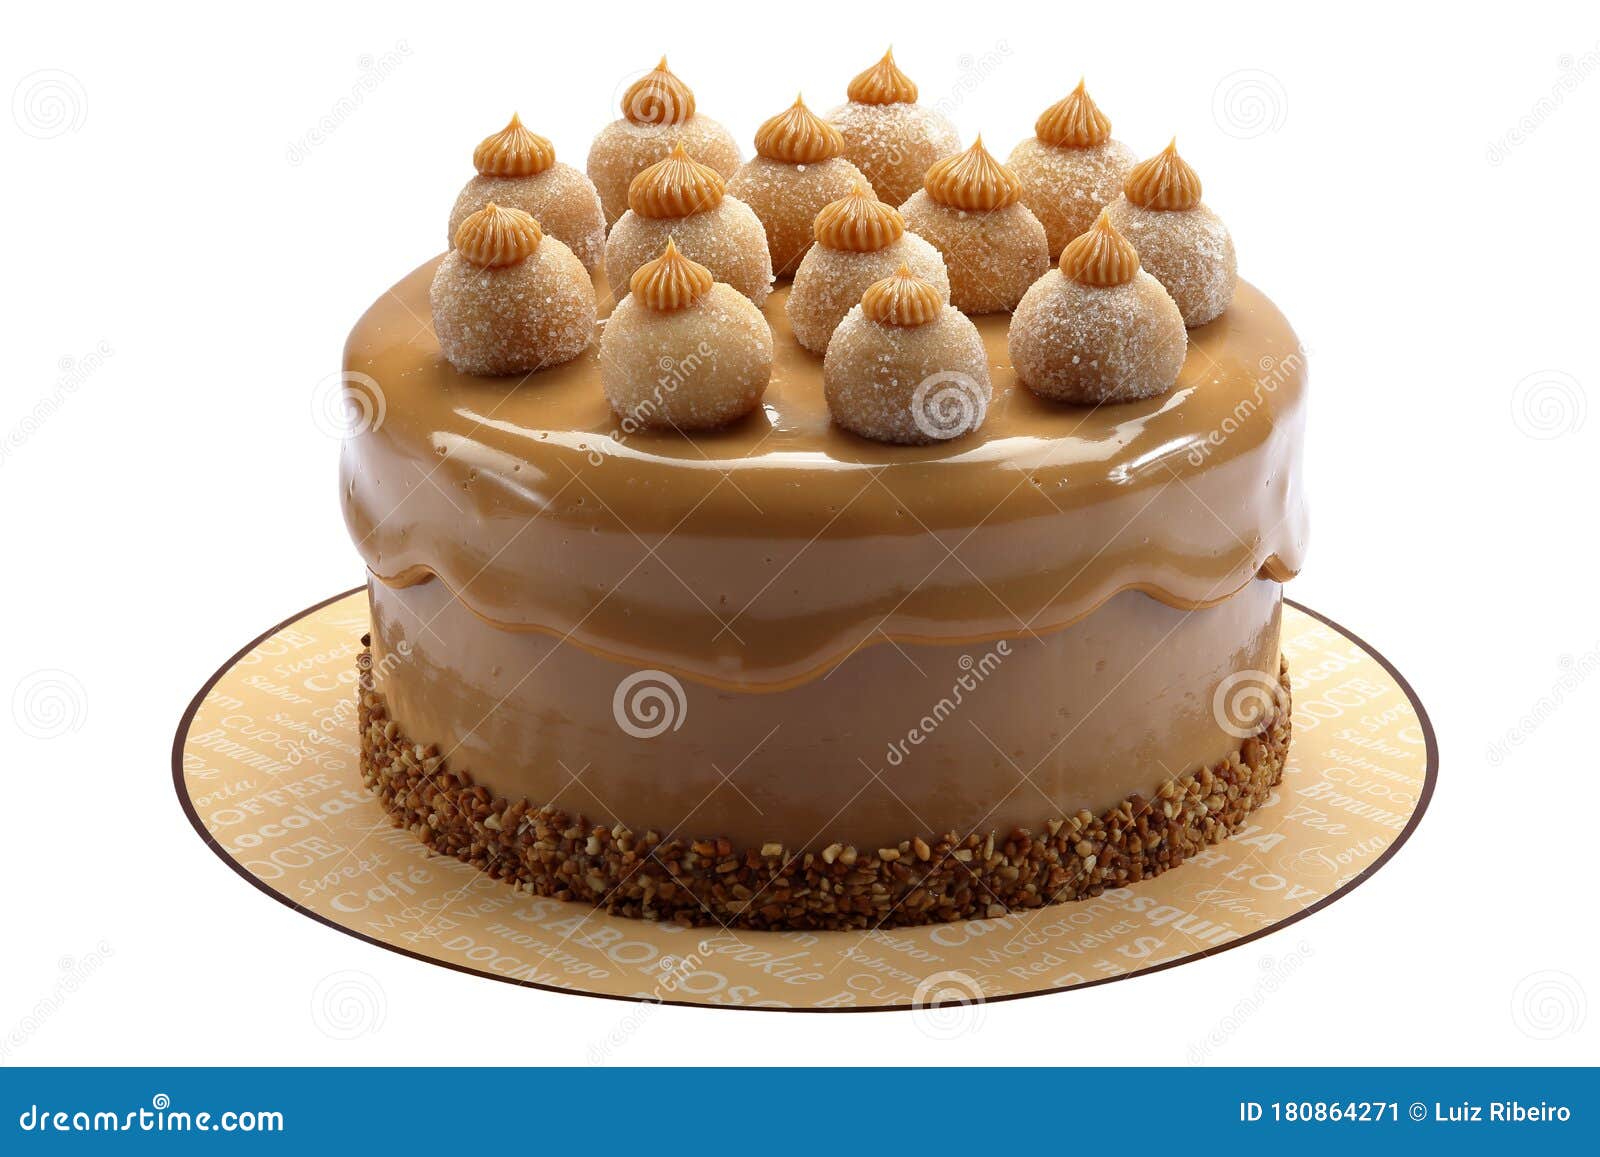 cake with dulce de leche